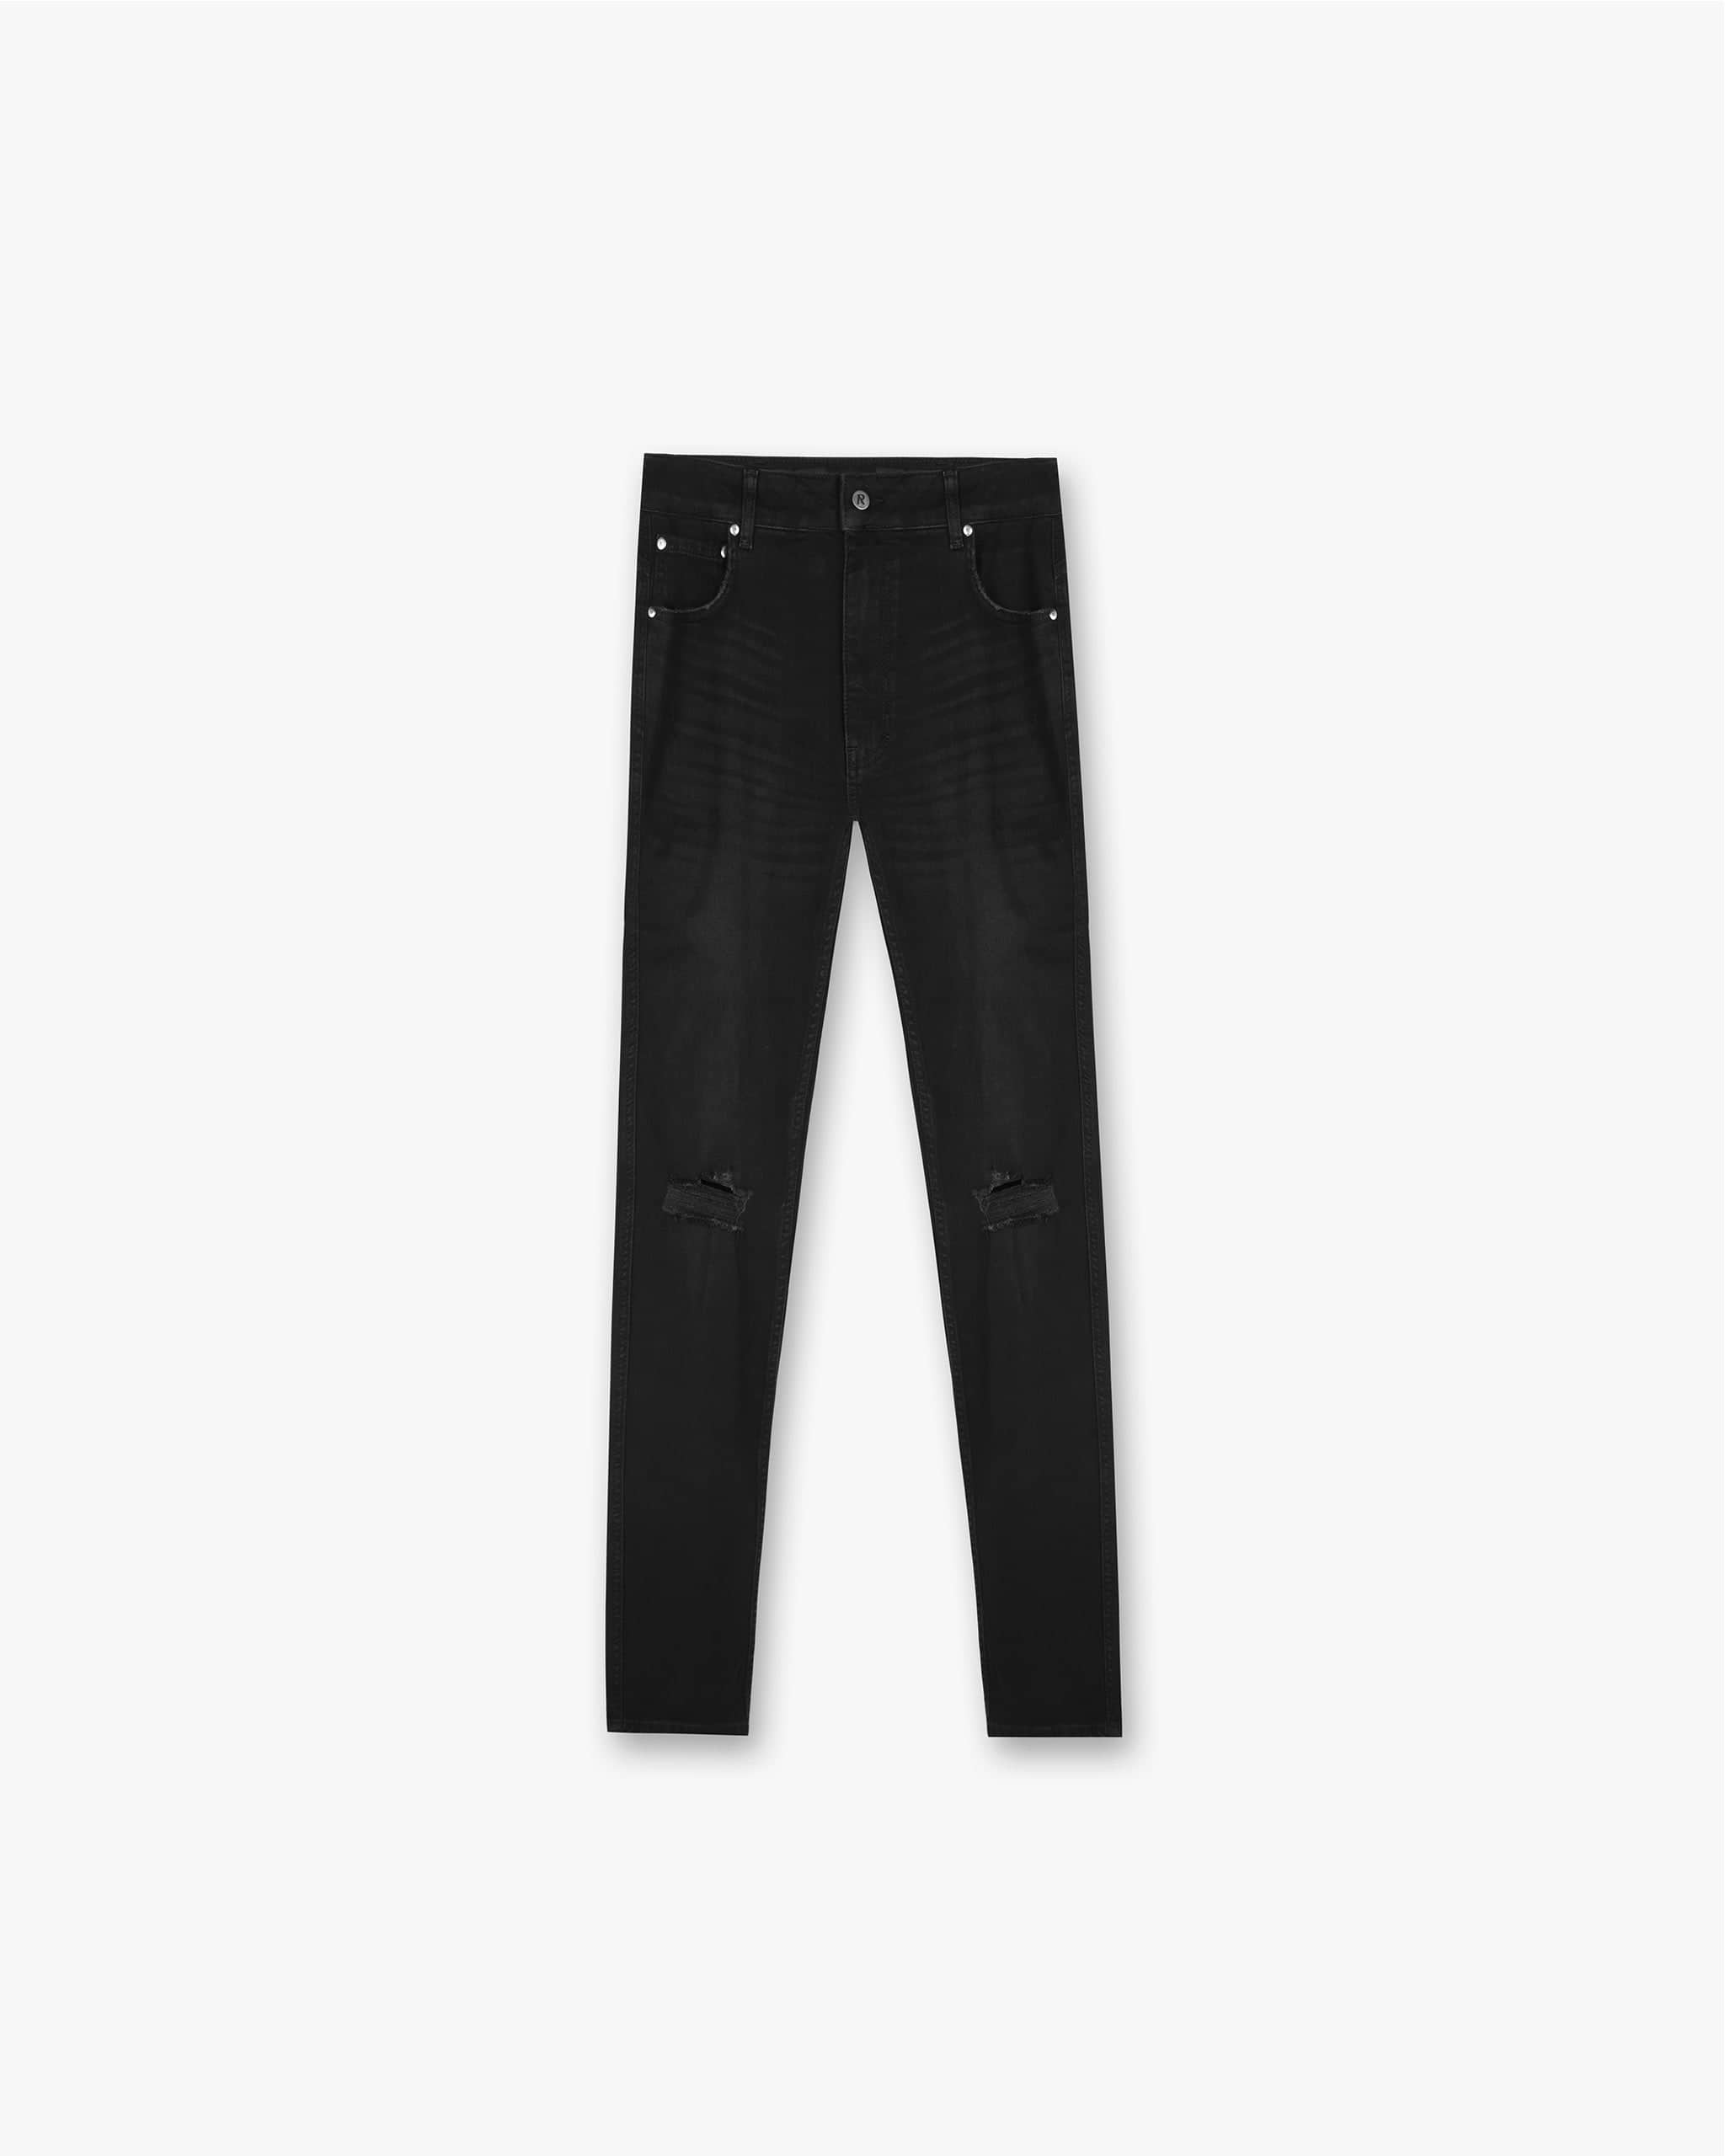 Streetwear Fashion Black Jeans Men Elastic Slim Fit Destroyed Ripped Jeans  Zipper Designer Hip Hop Punk Denim Pencil Pants Men